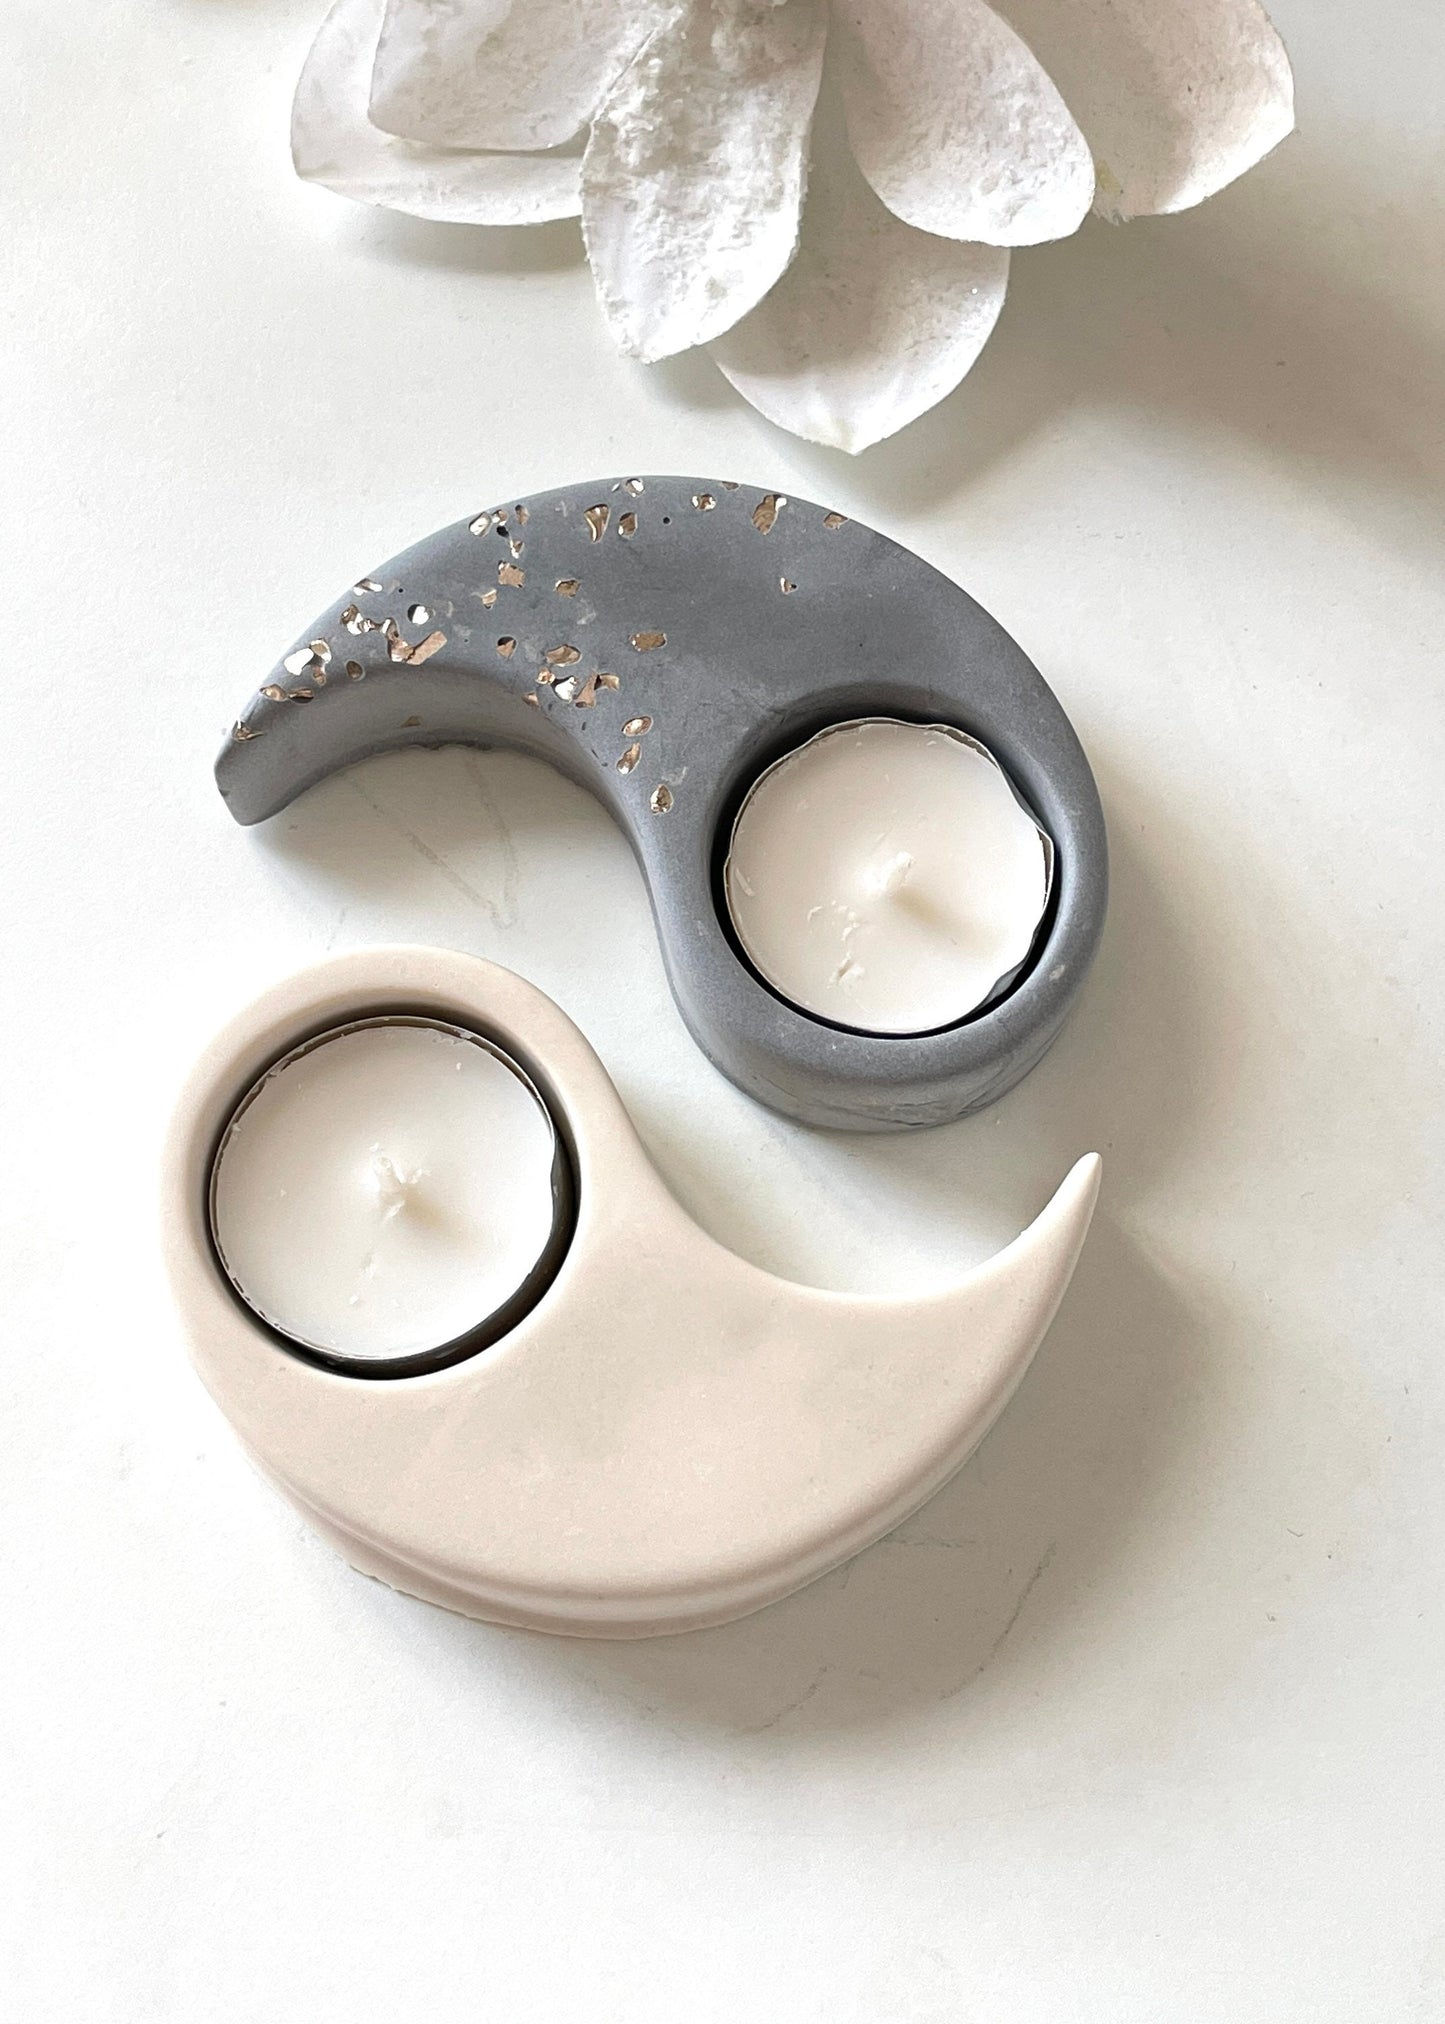 Yin Yang Symbol Silicone Mold: Yoga Candle & Resin Casting Crafts